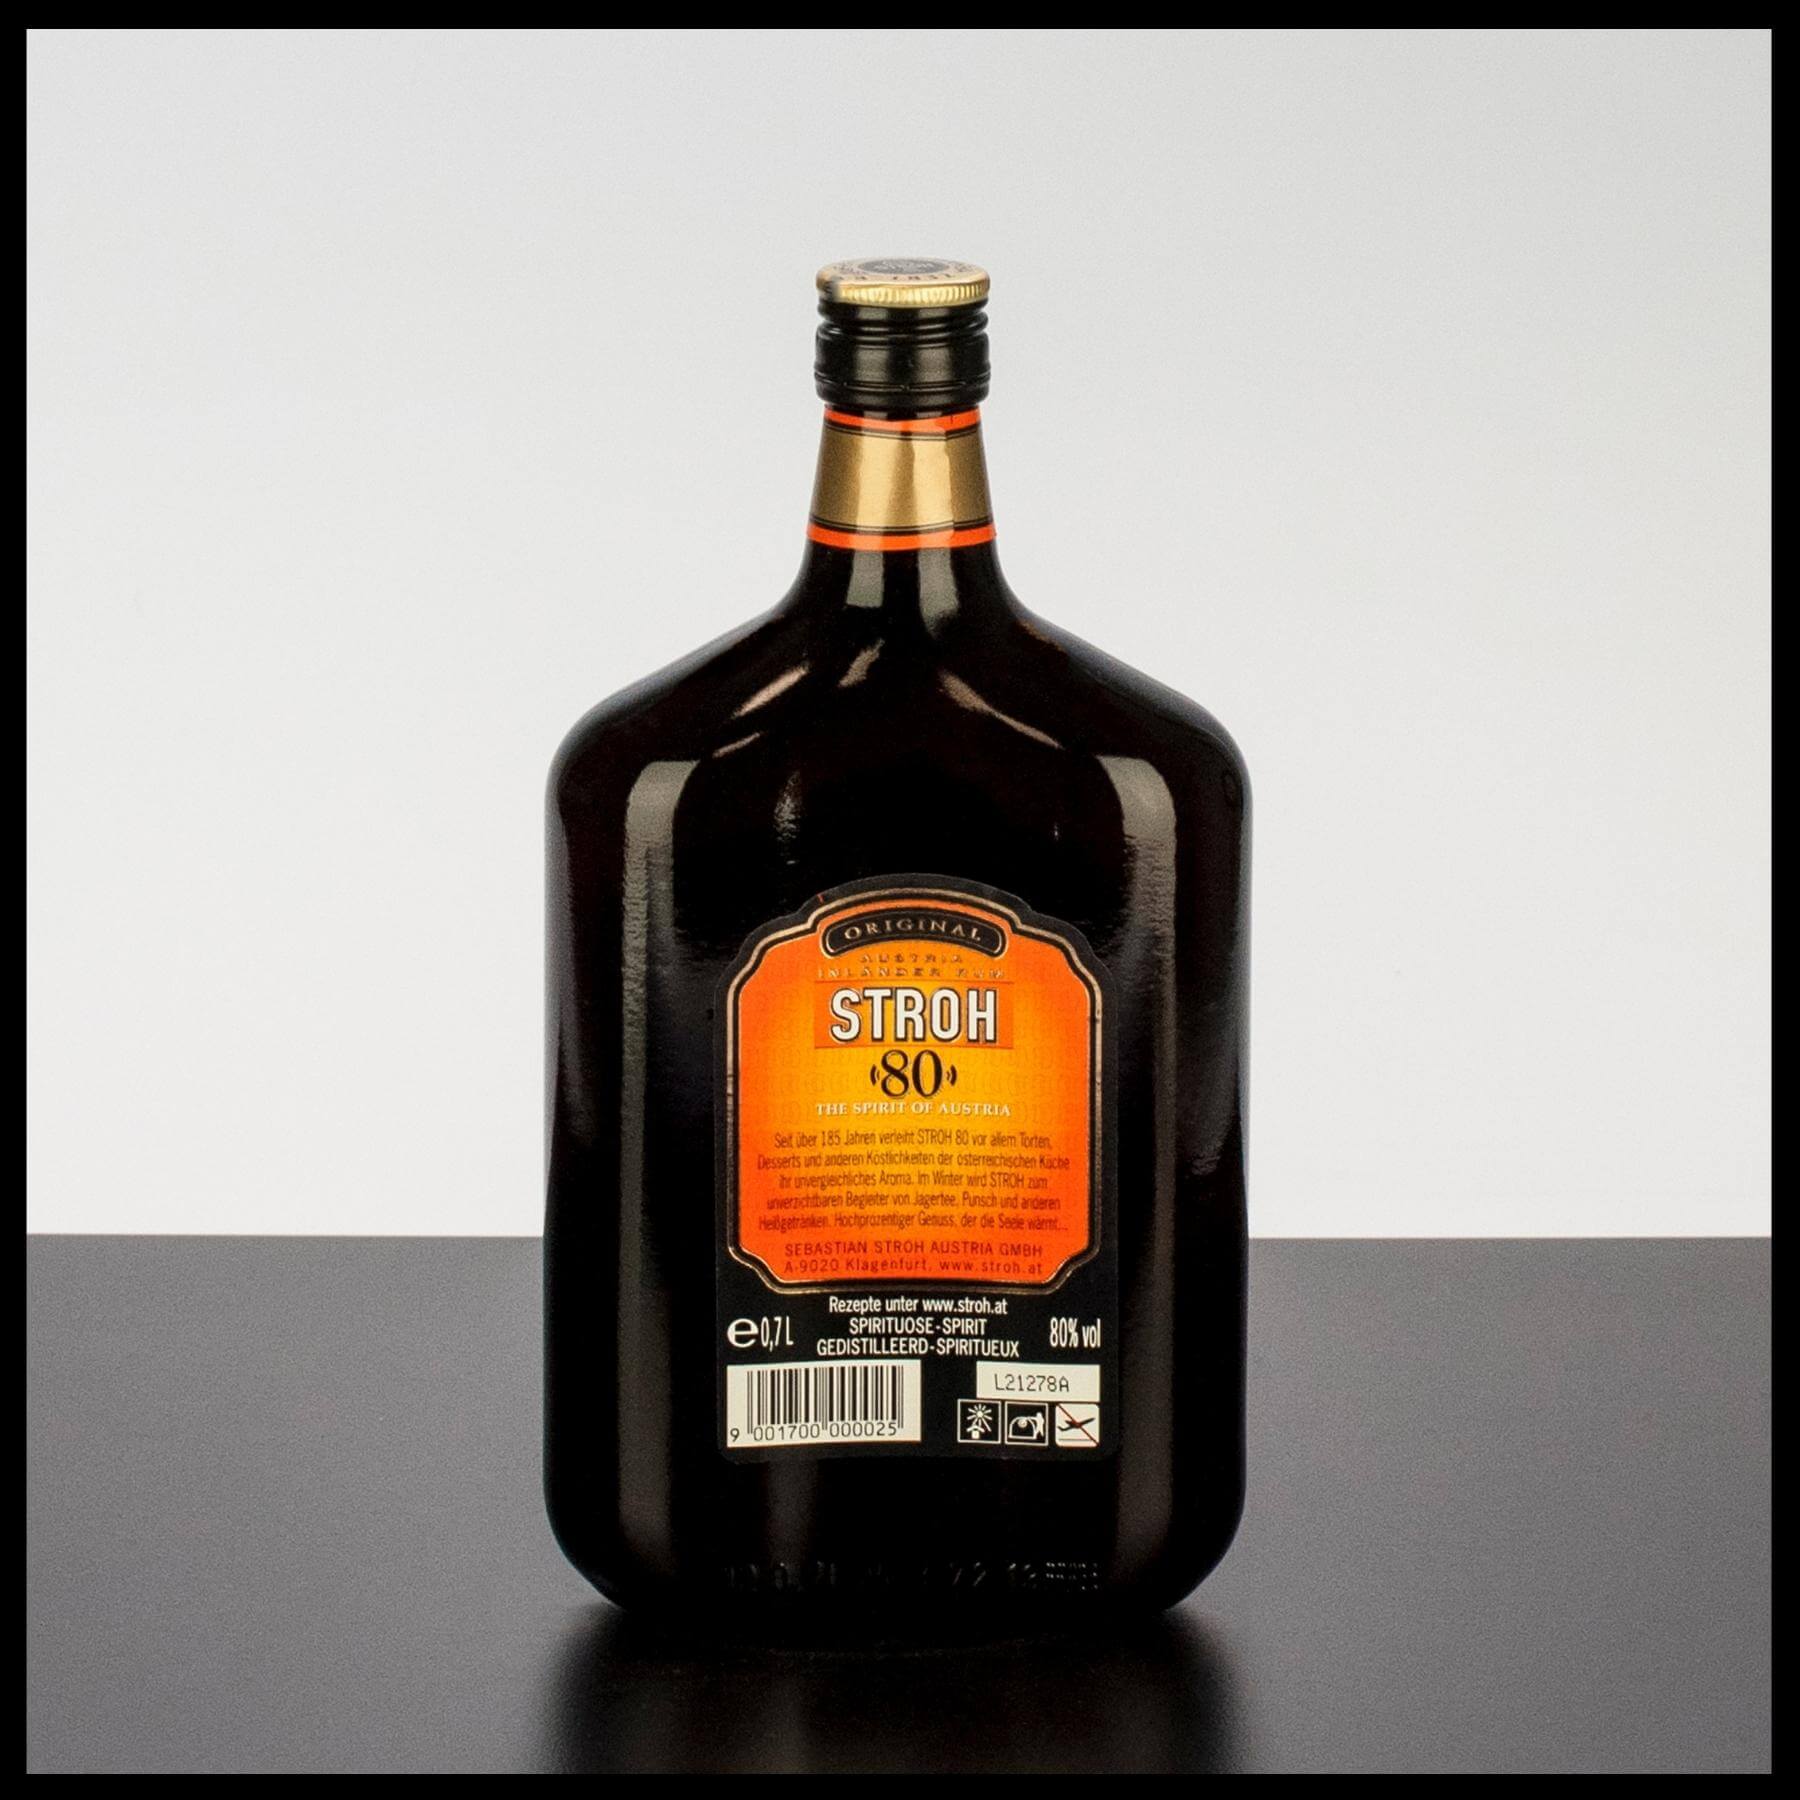 Stroh 80 Original Inländer-Rum 0,7L - 80% Vol. - Trinklusiv